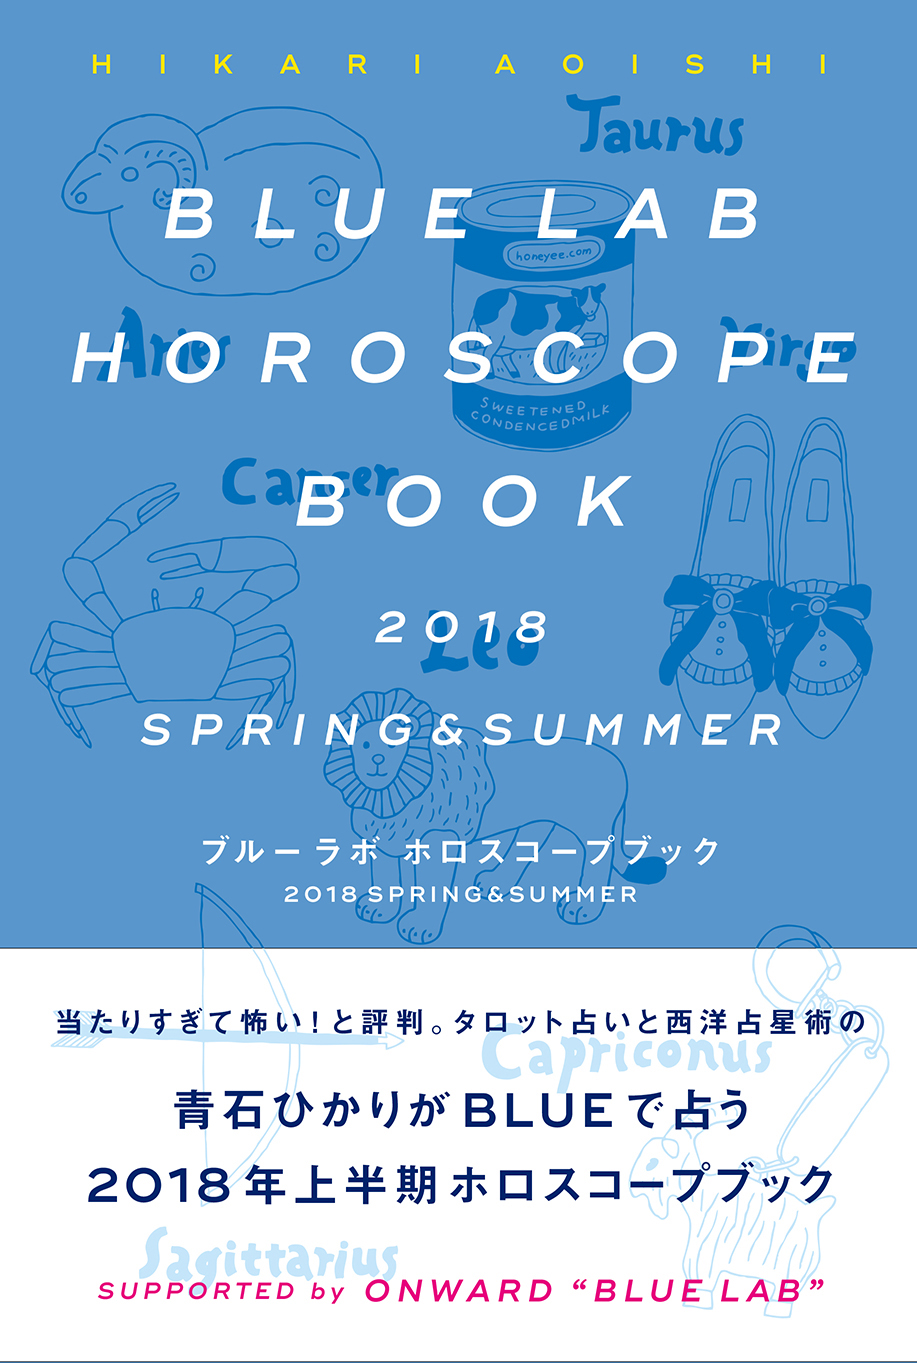 BLUE LAB HOROSCOPE BOOK 2018 SPRING & SUMMER